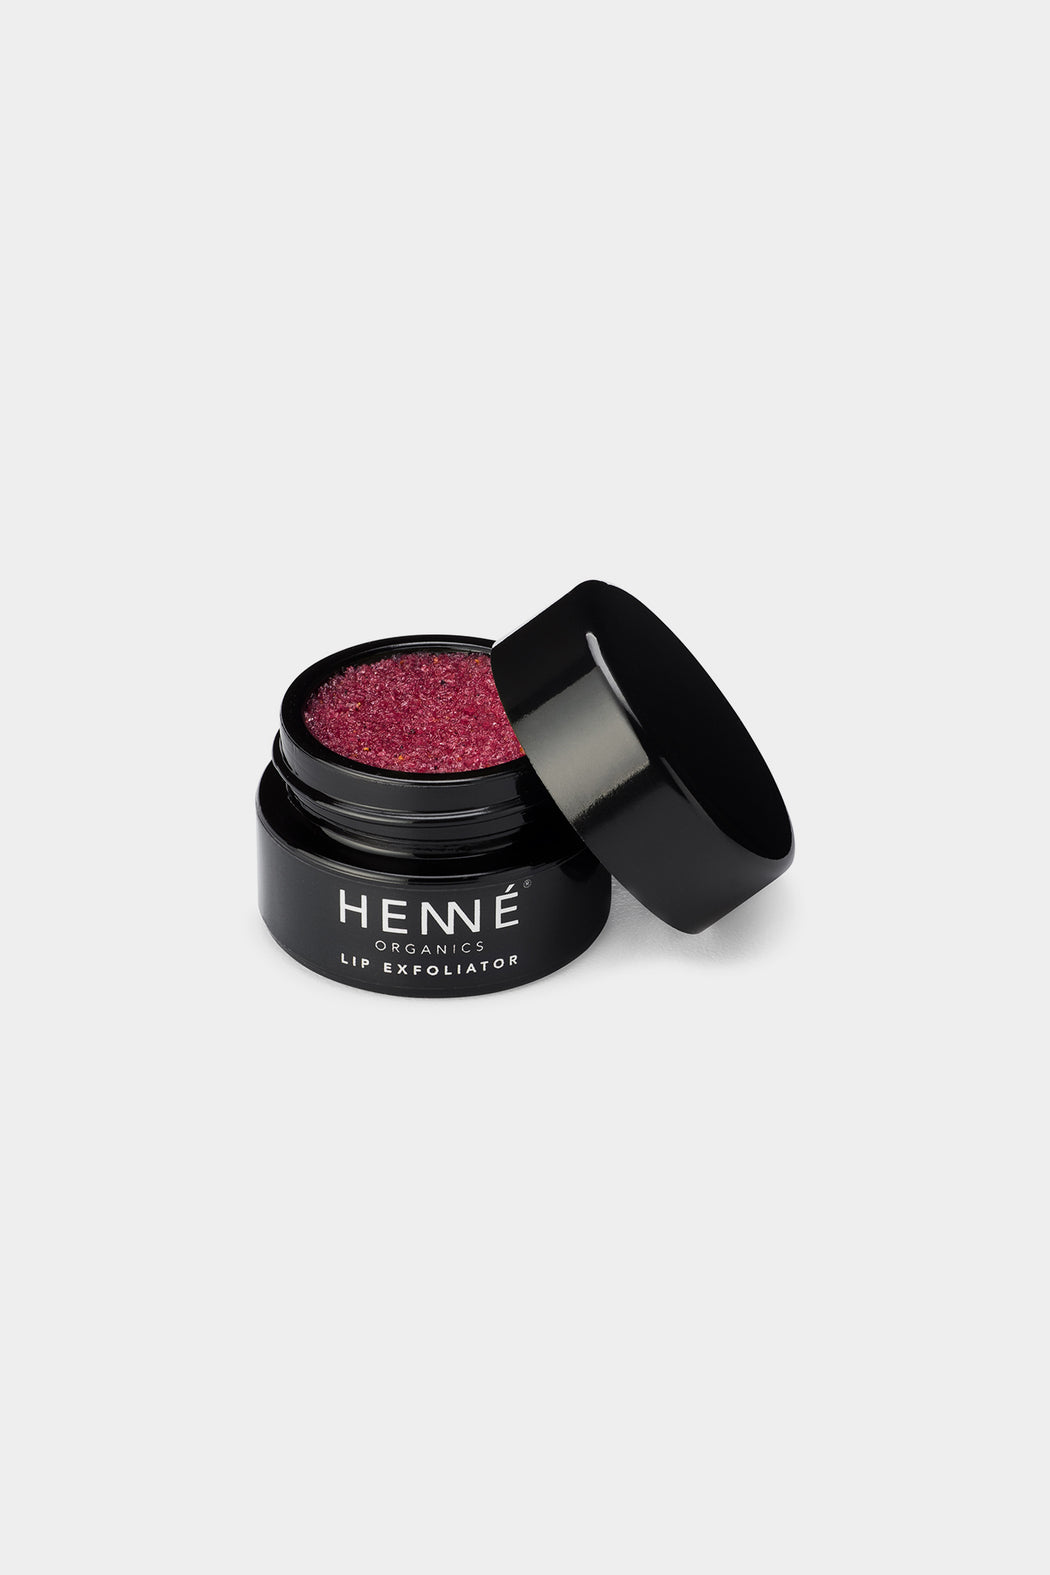 Henne Organics | Nordic Berries Lip Exfoliator | Hazel & Rose | Minneapolis